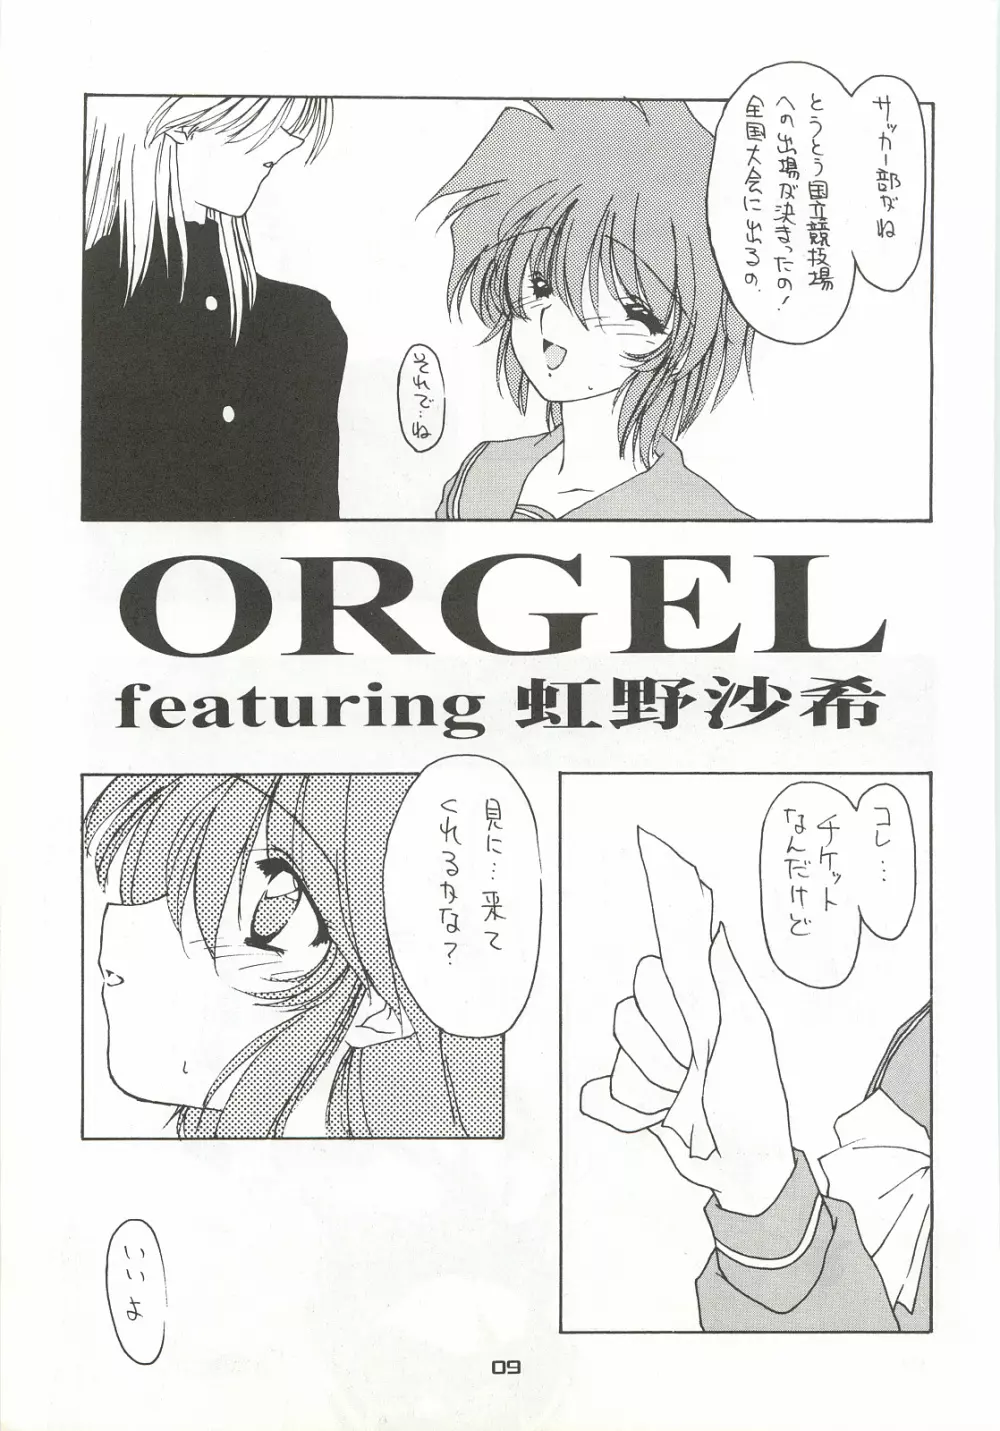 ORGEL4 featuring 虹野沙希 - page8